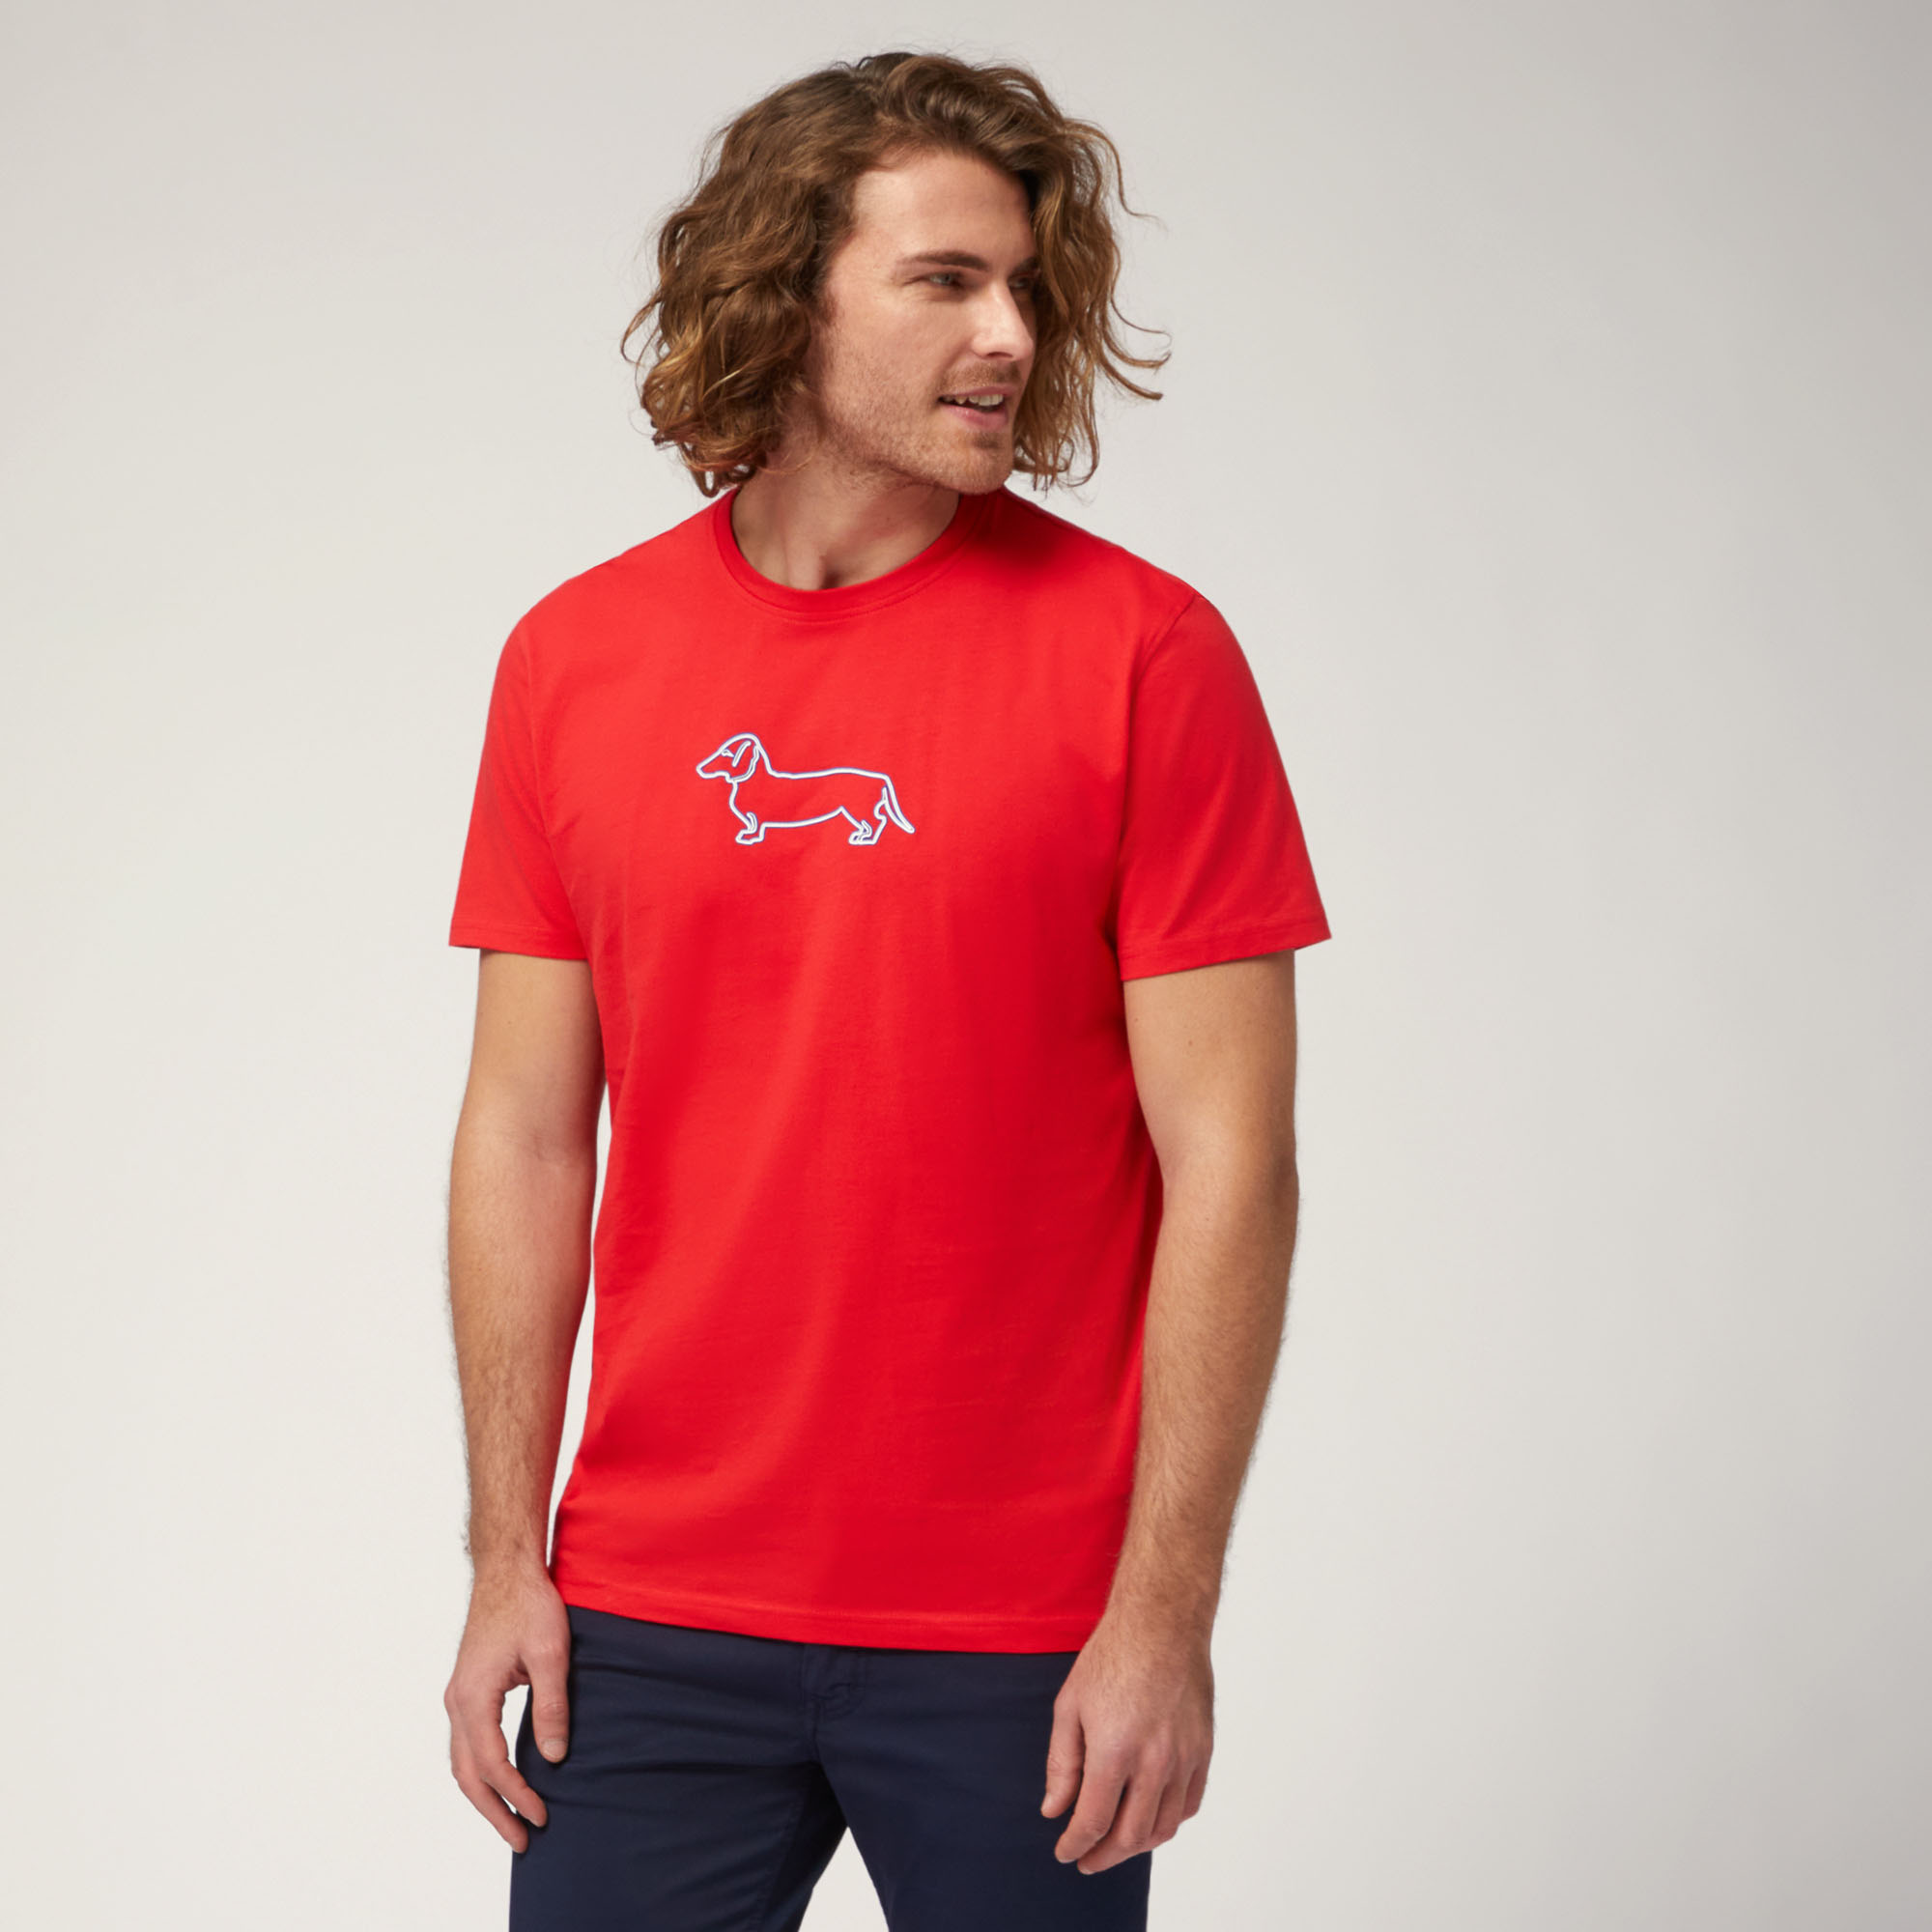 T-Shirt Con Stampa Bassotto 3D, Rosso Chiaro, large